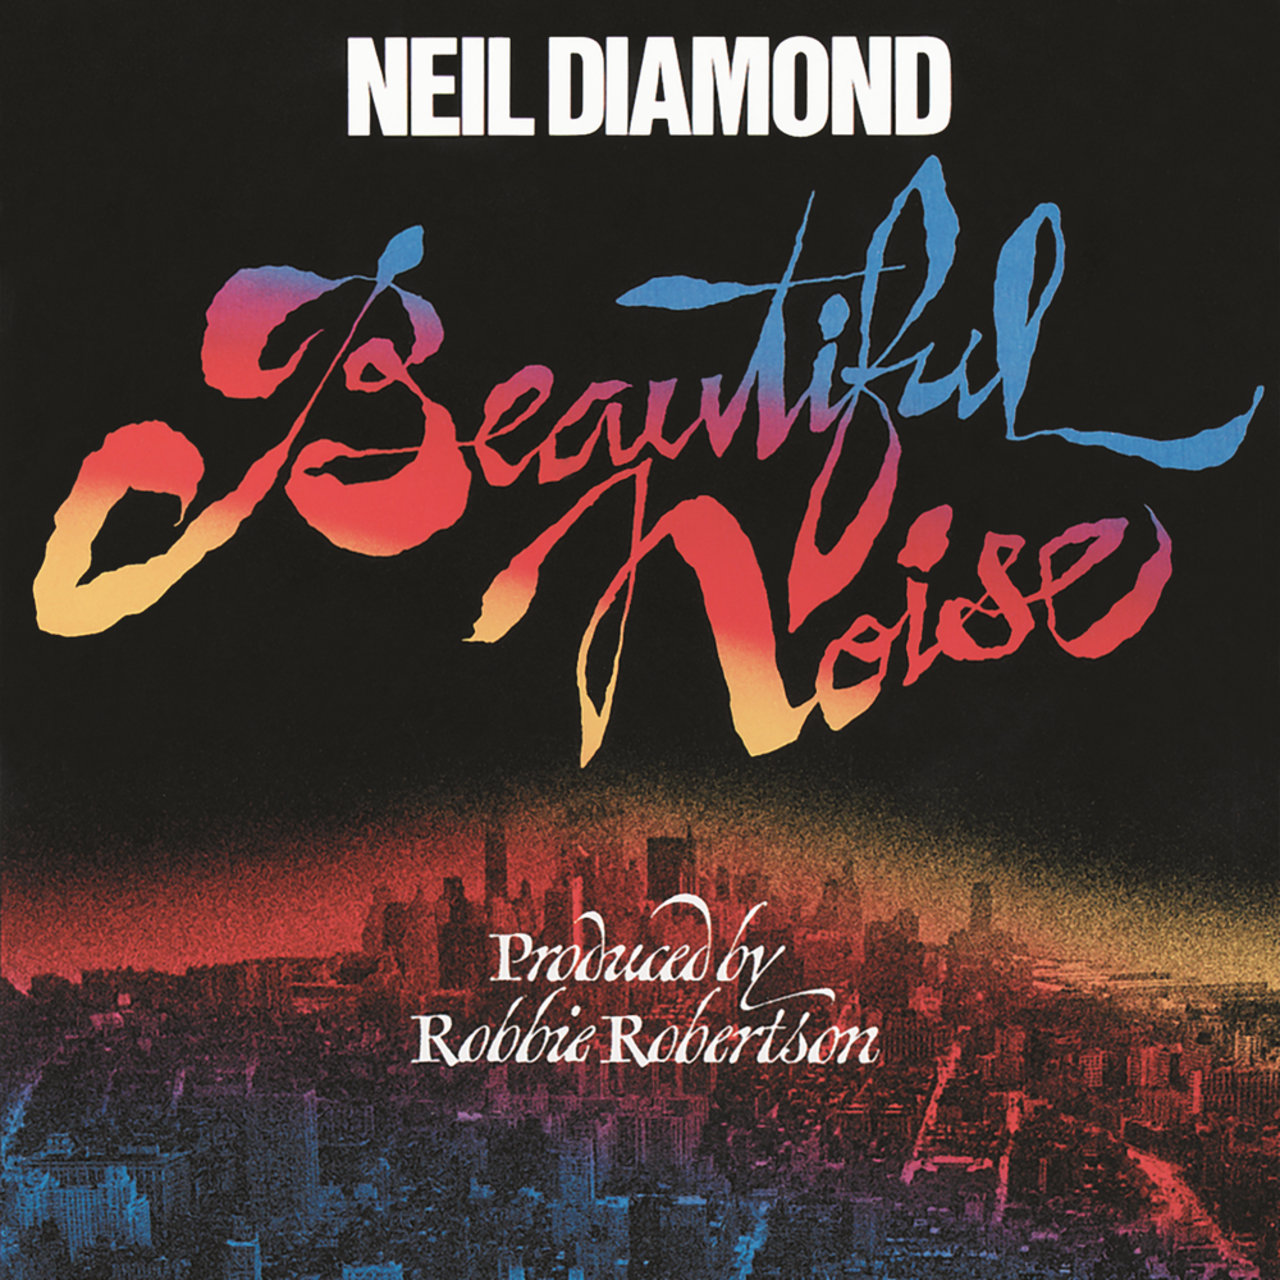 Neil Diamond - Beautiful Noise (1976/2016) [HDTracks FLAC 24bit/192kHz]